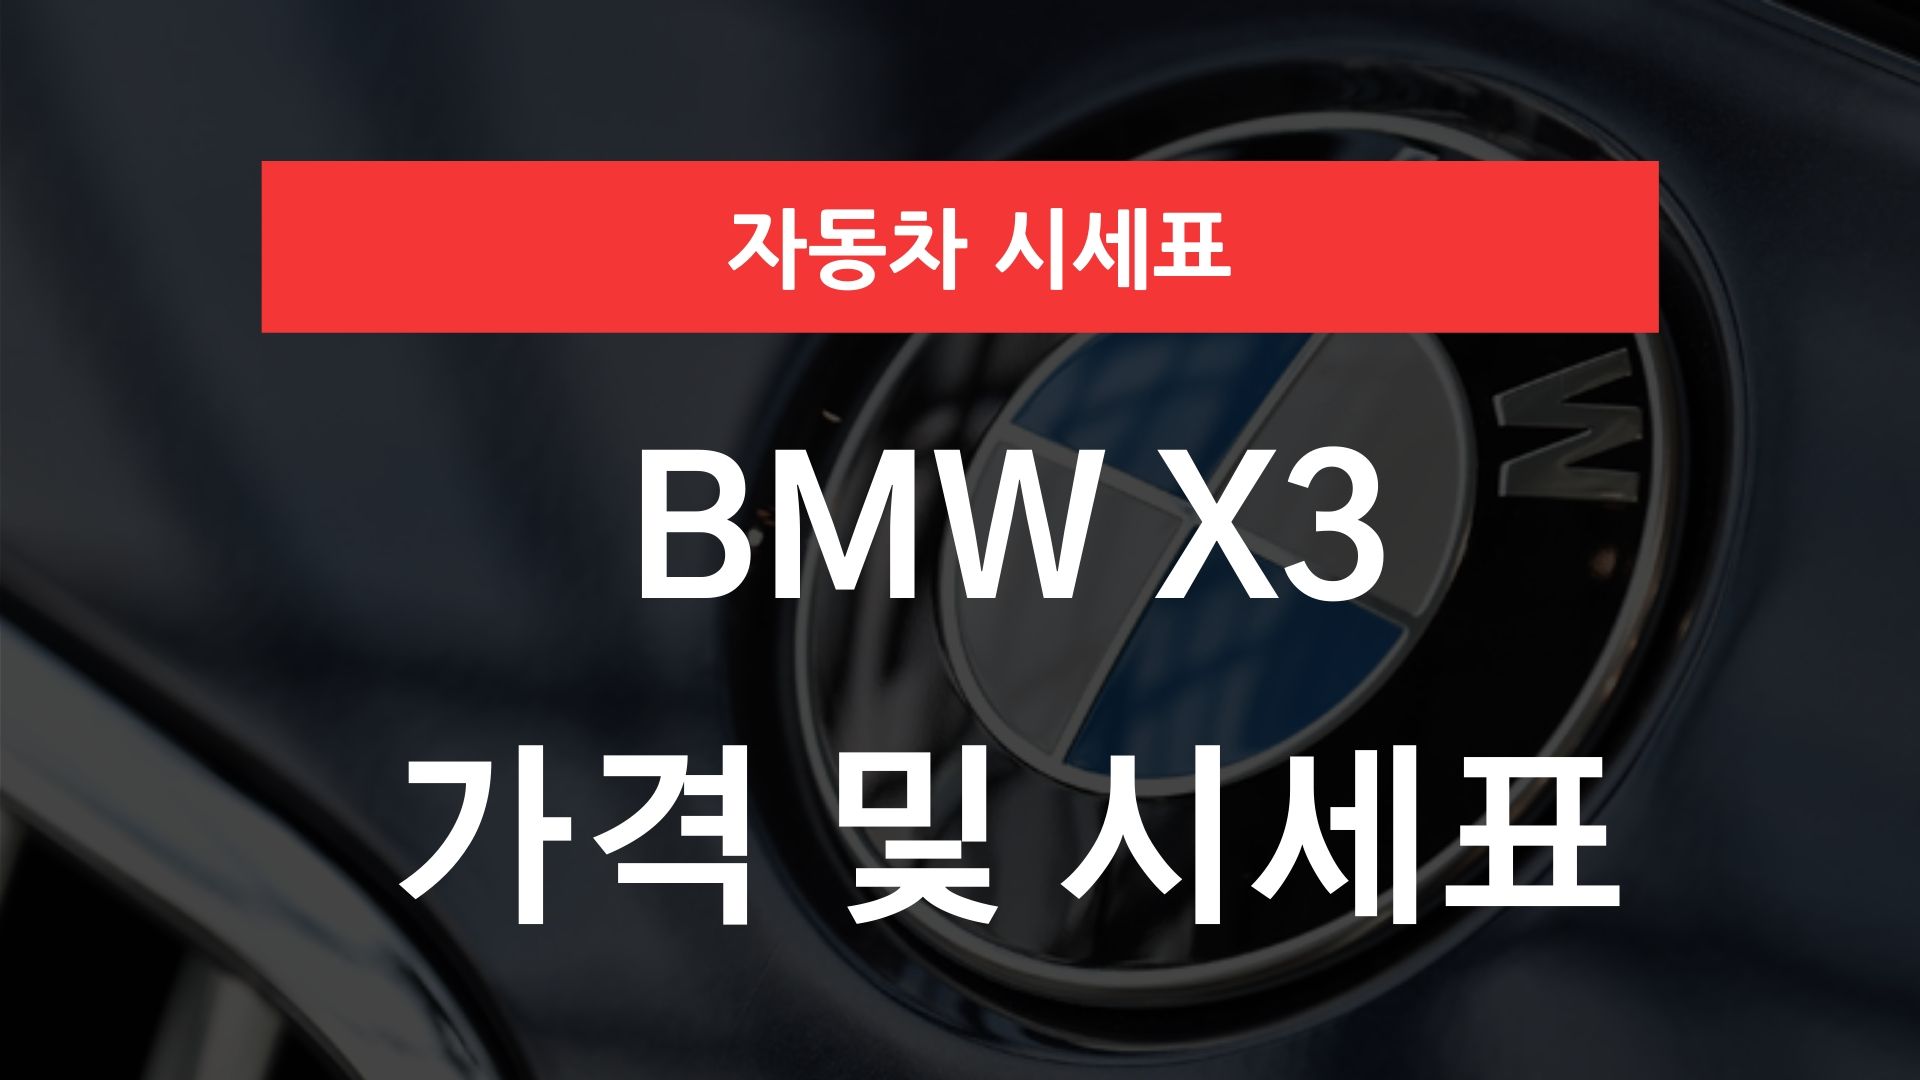 BMW X3 가격